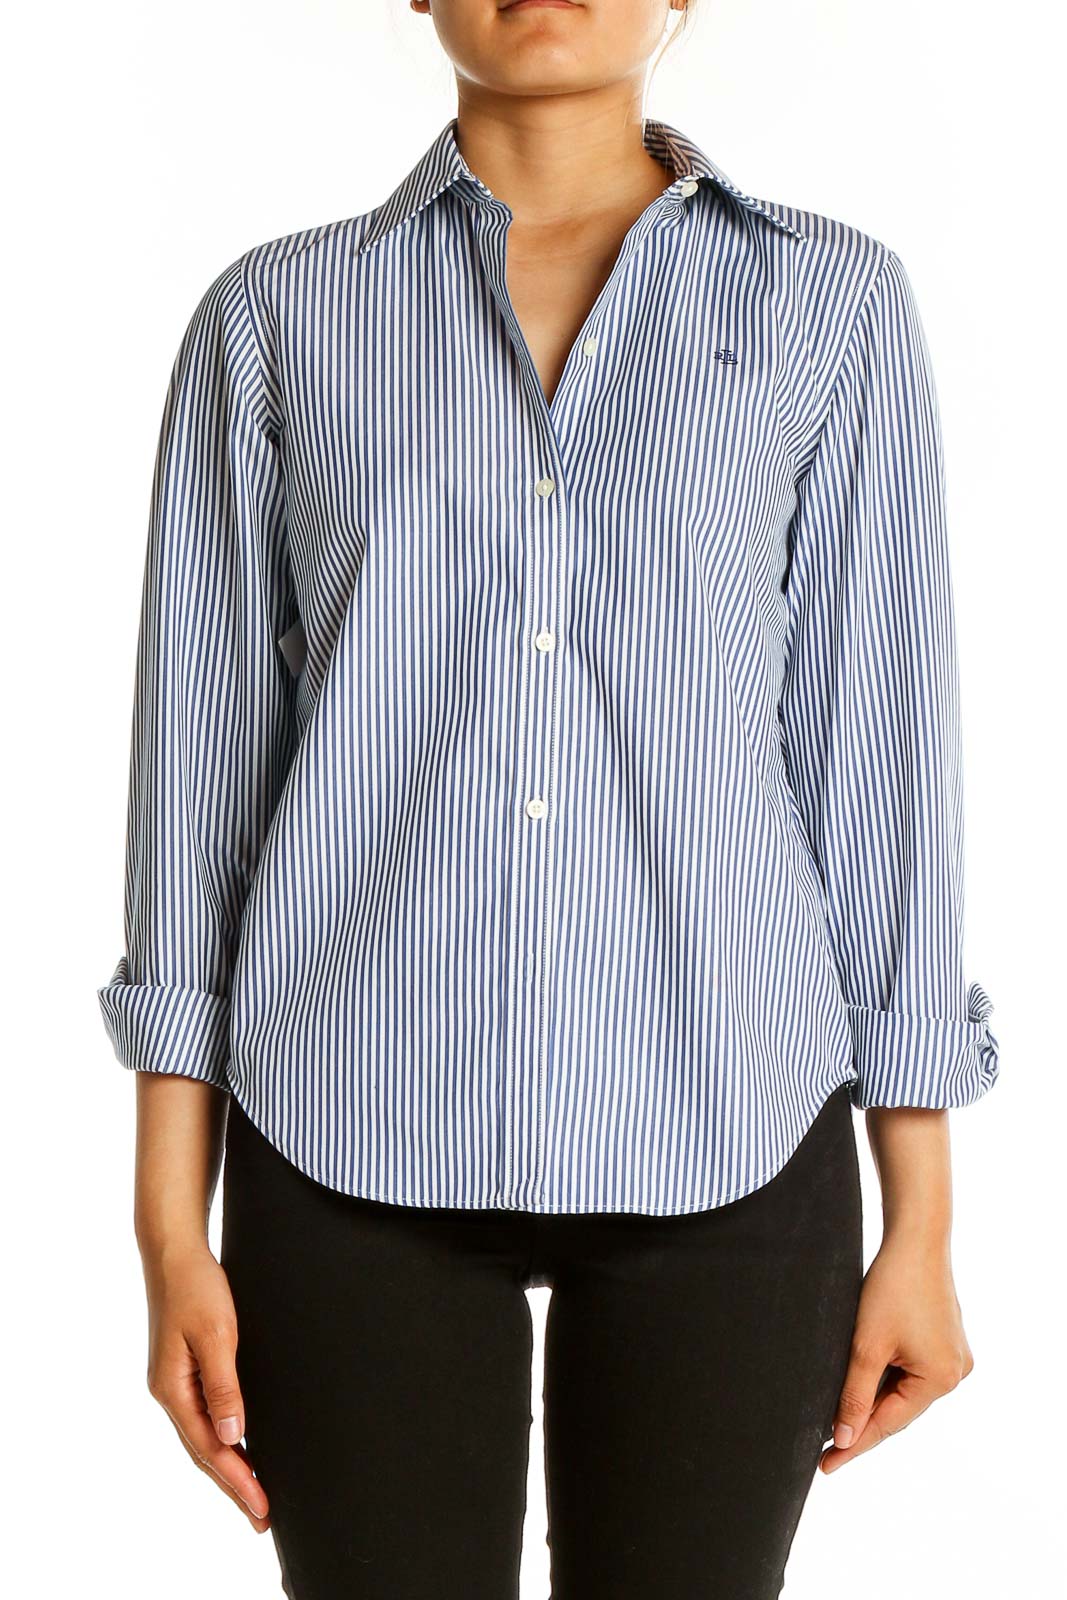 Blue White Pin Stripes Shirt Front